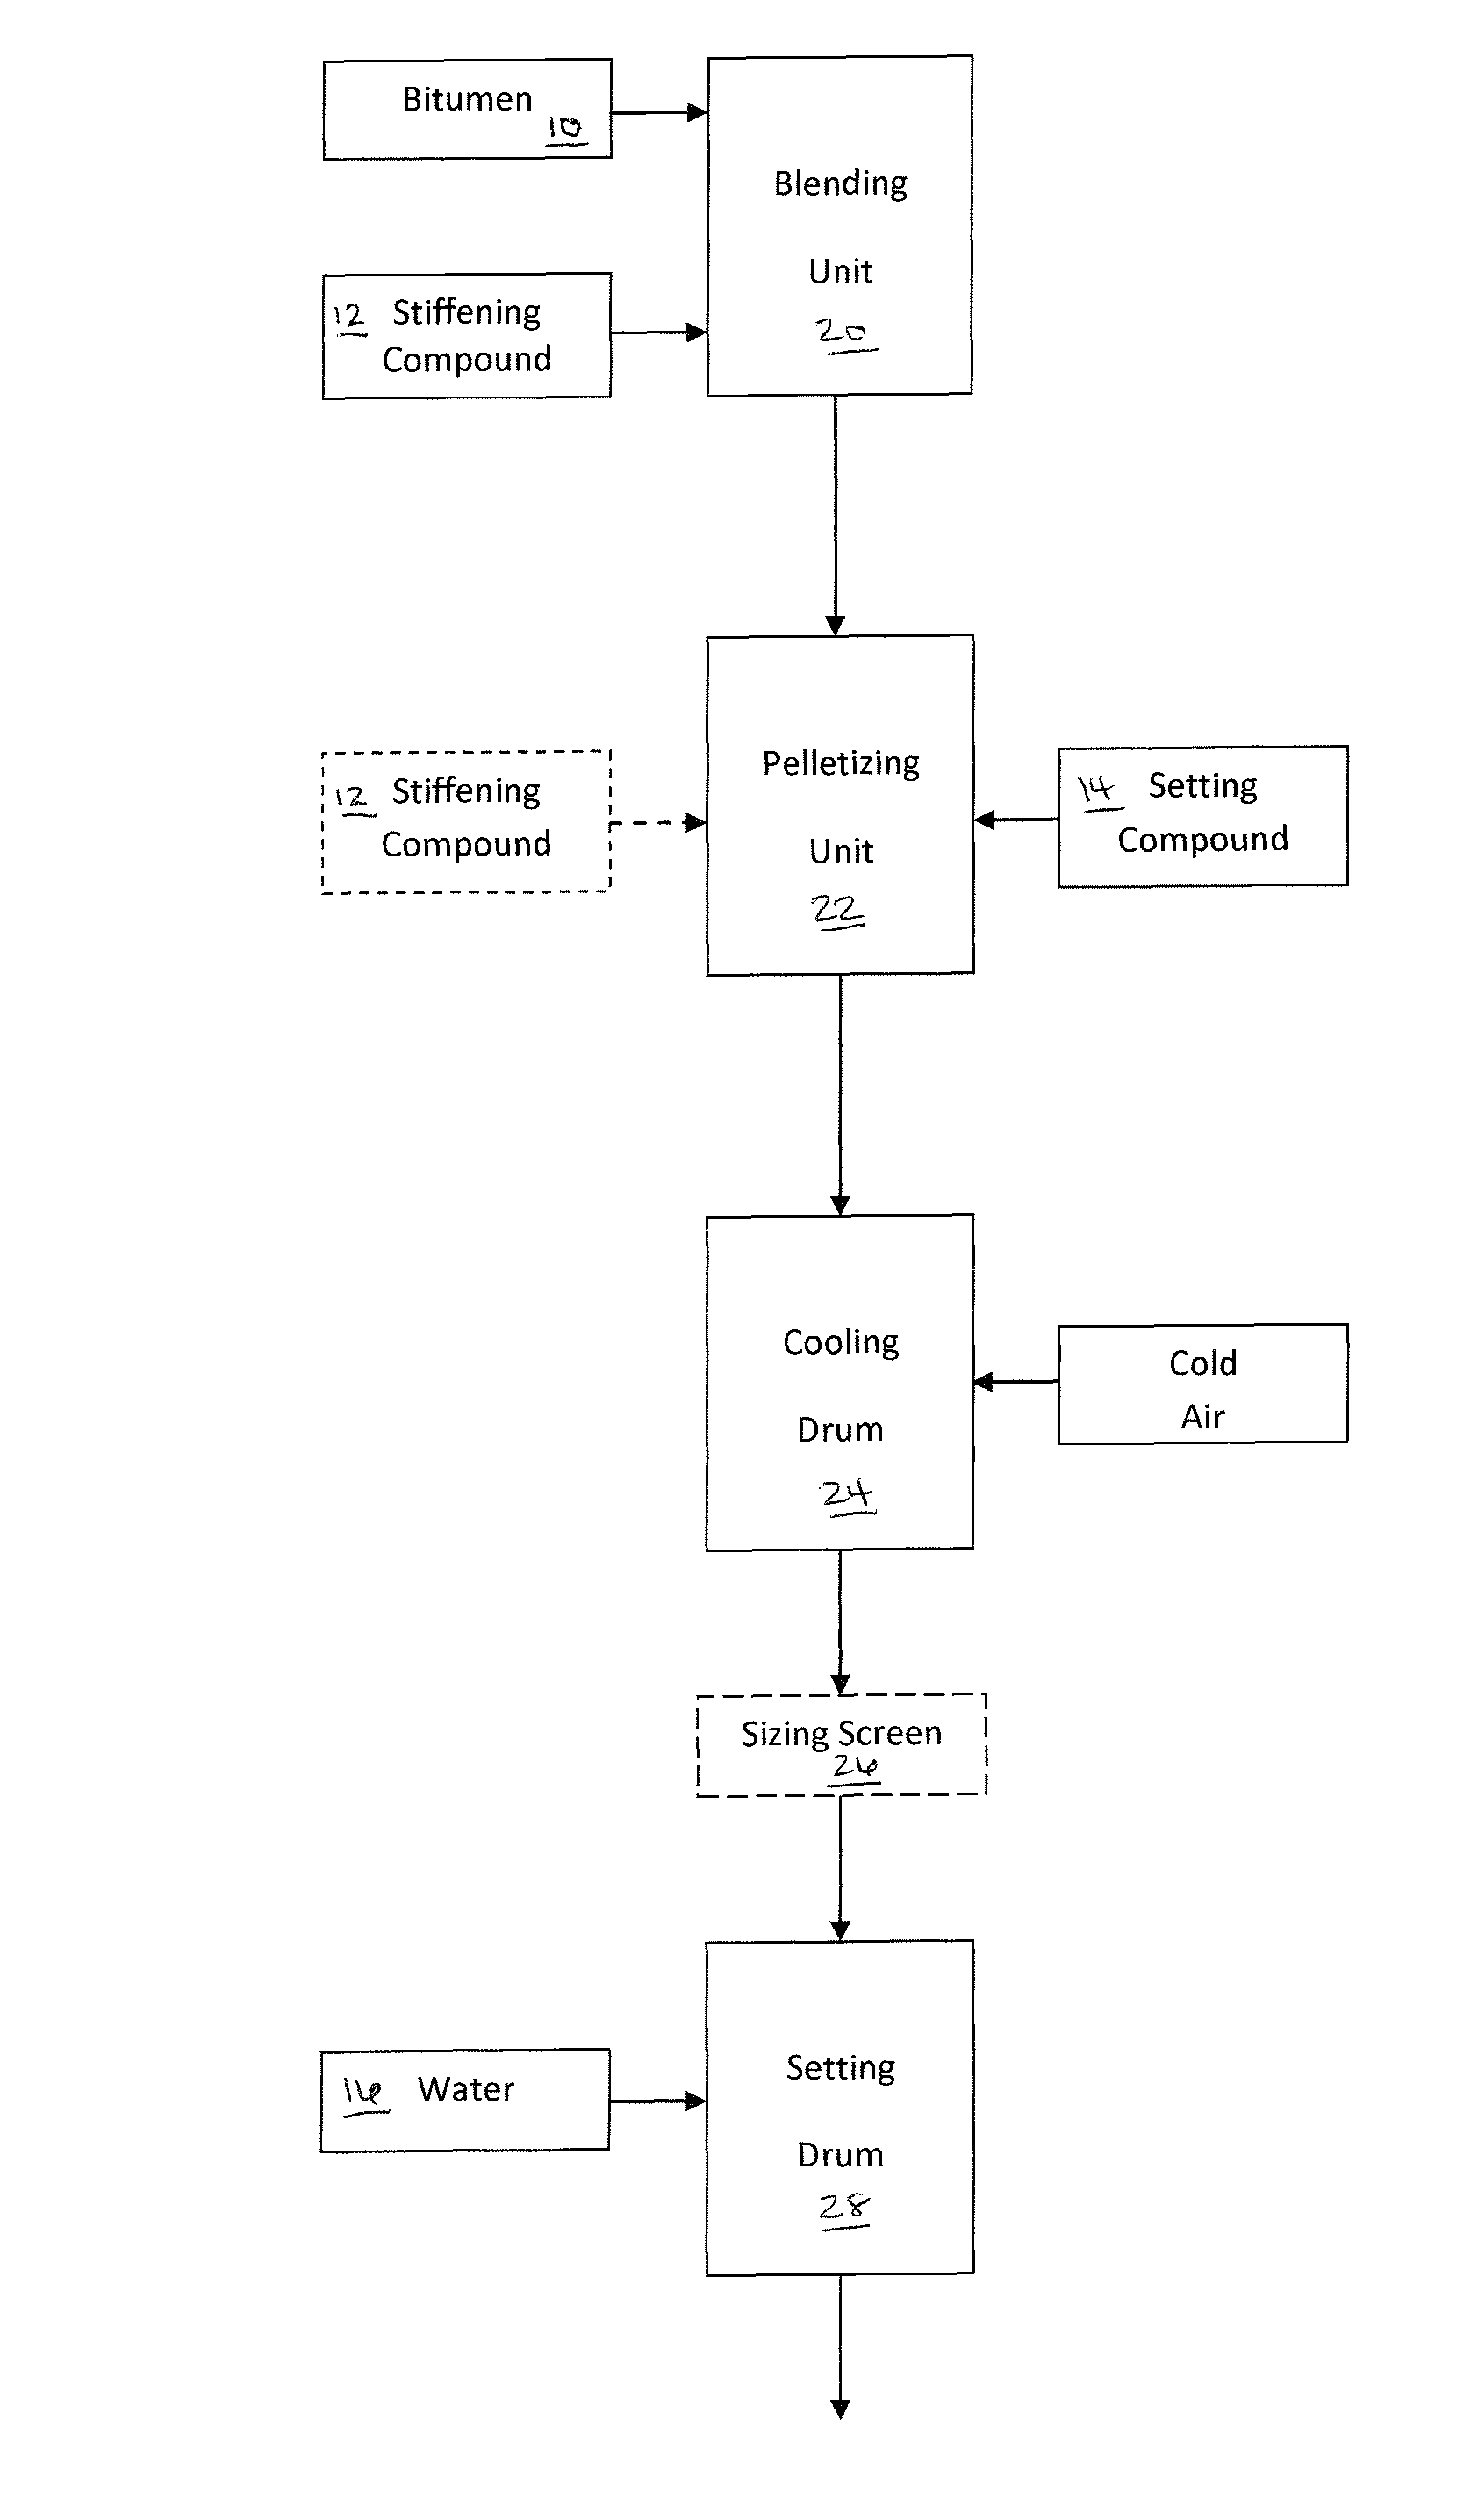 Composition for pelletized bitumen and method for preparing the same